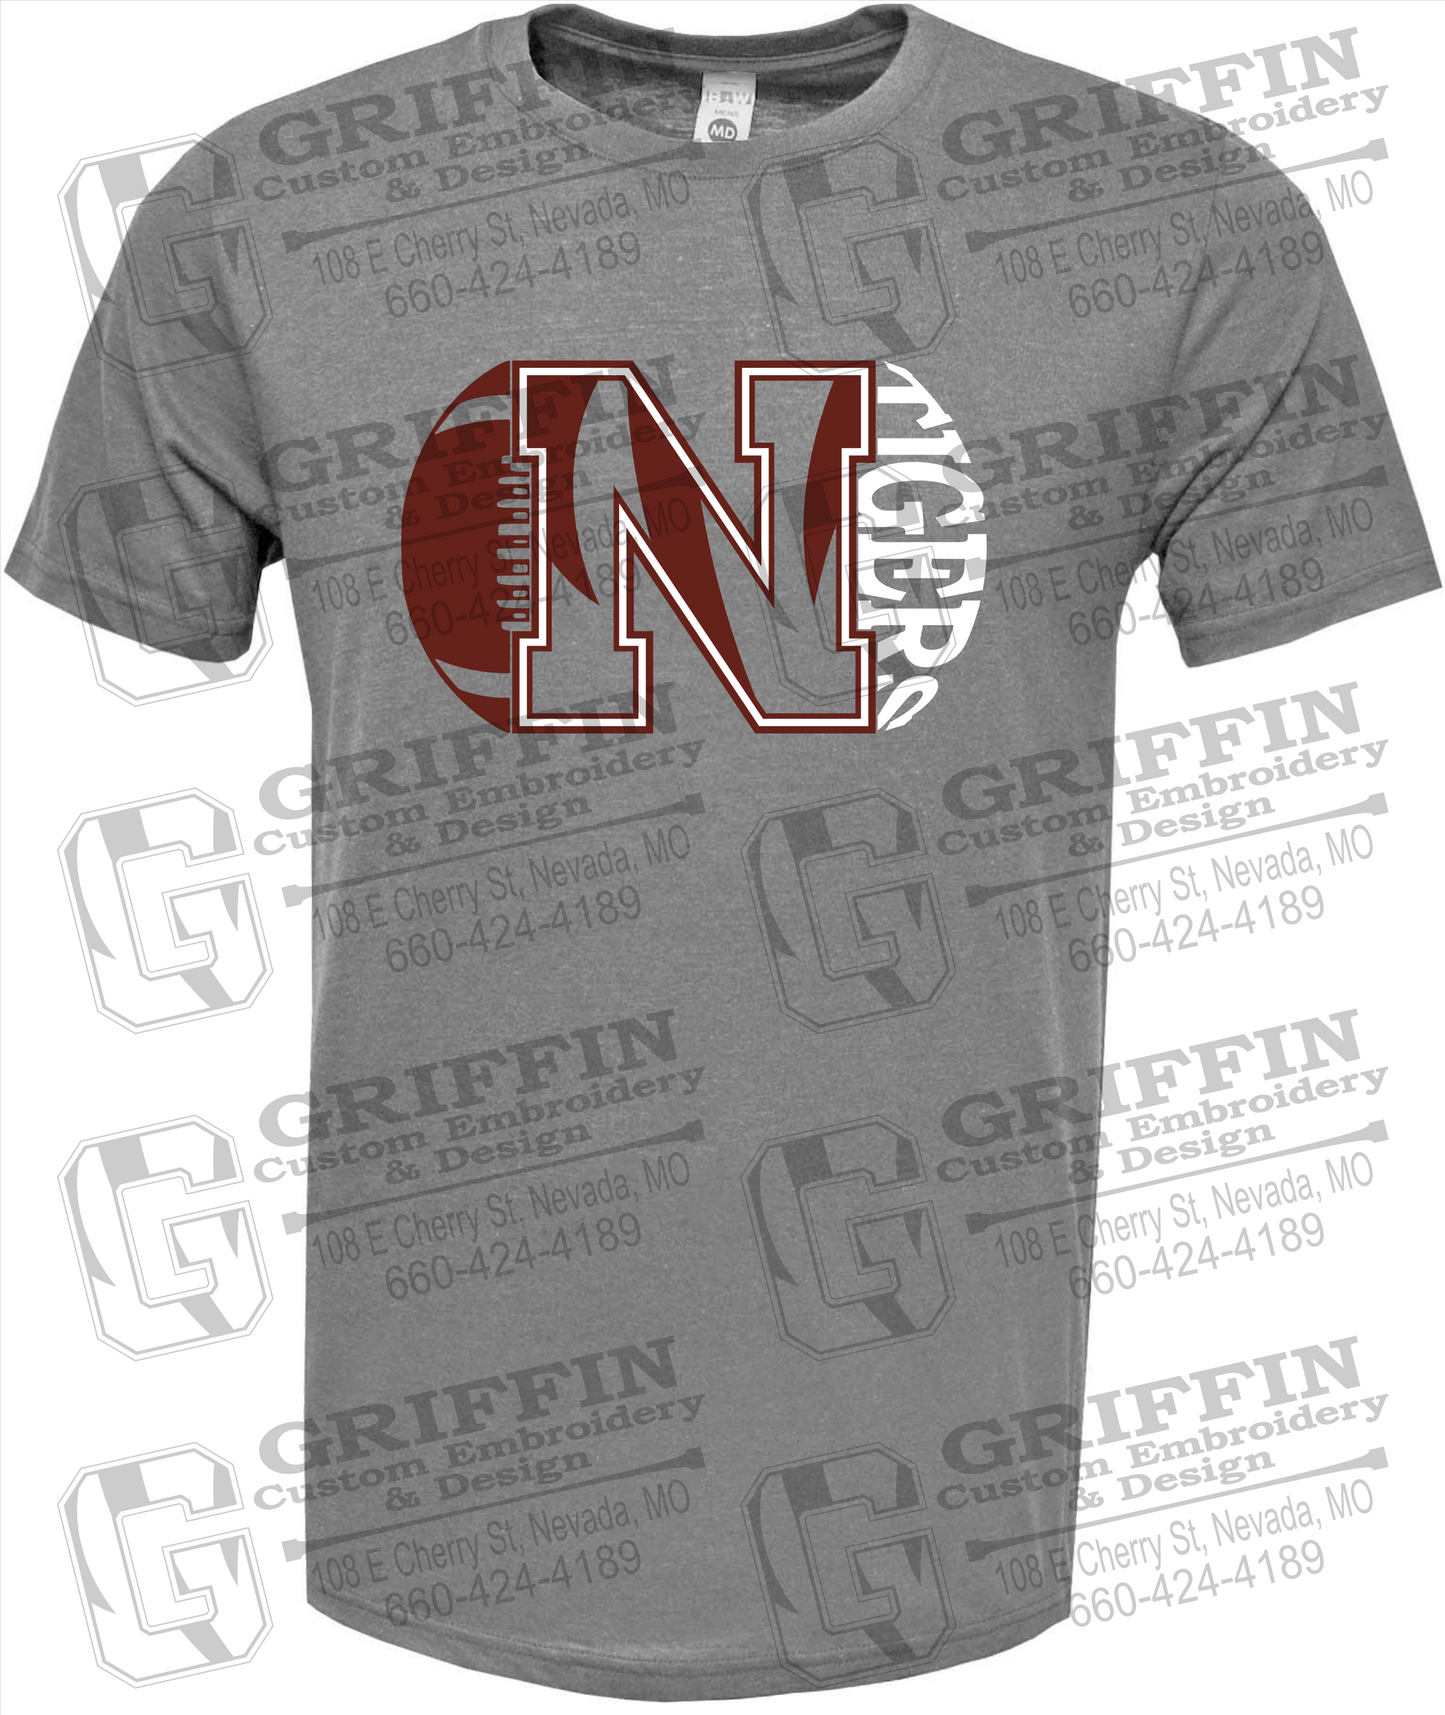 Nevada Tigers 20-S Short Sleeve T-Shirt - Football